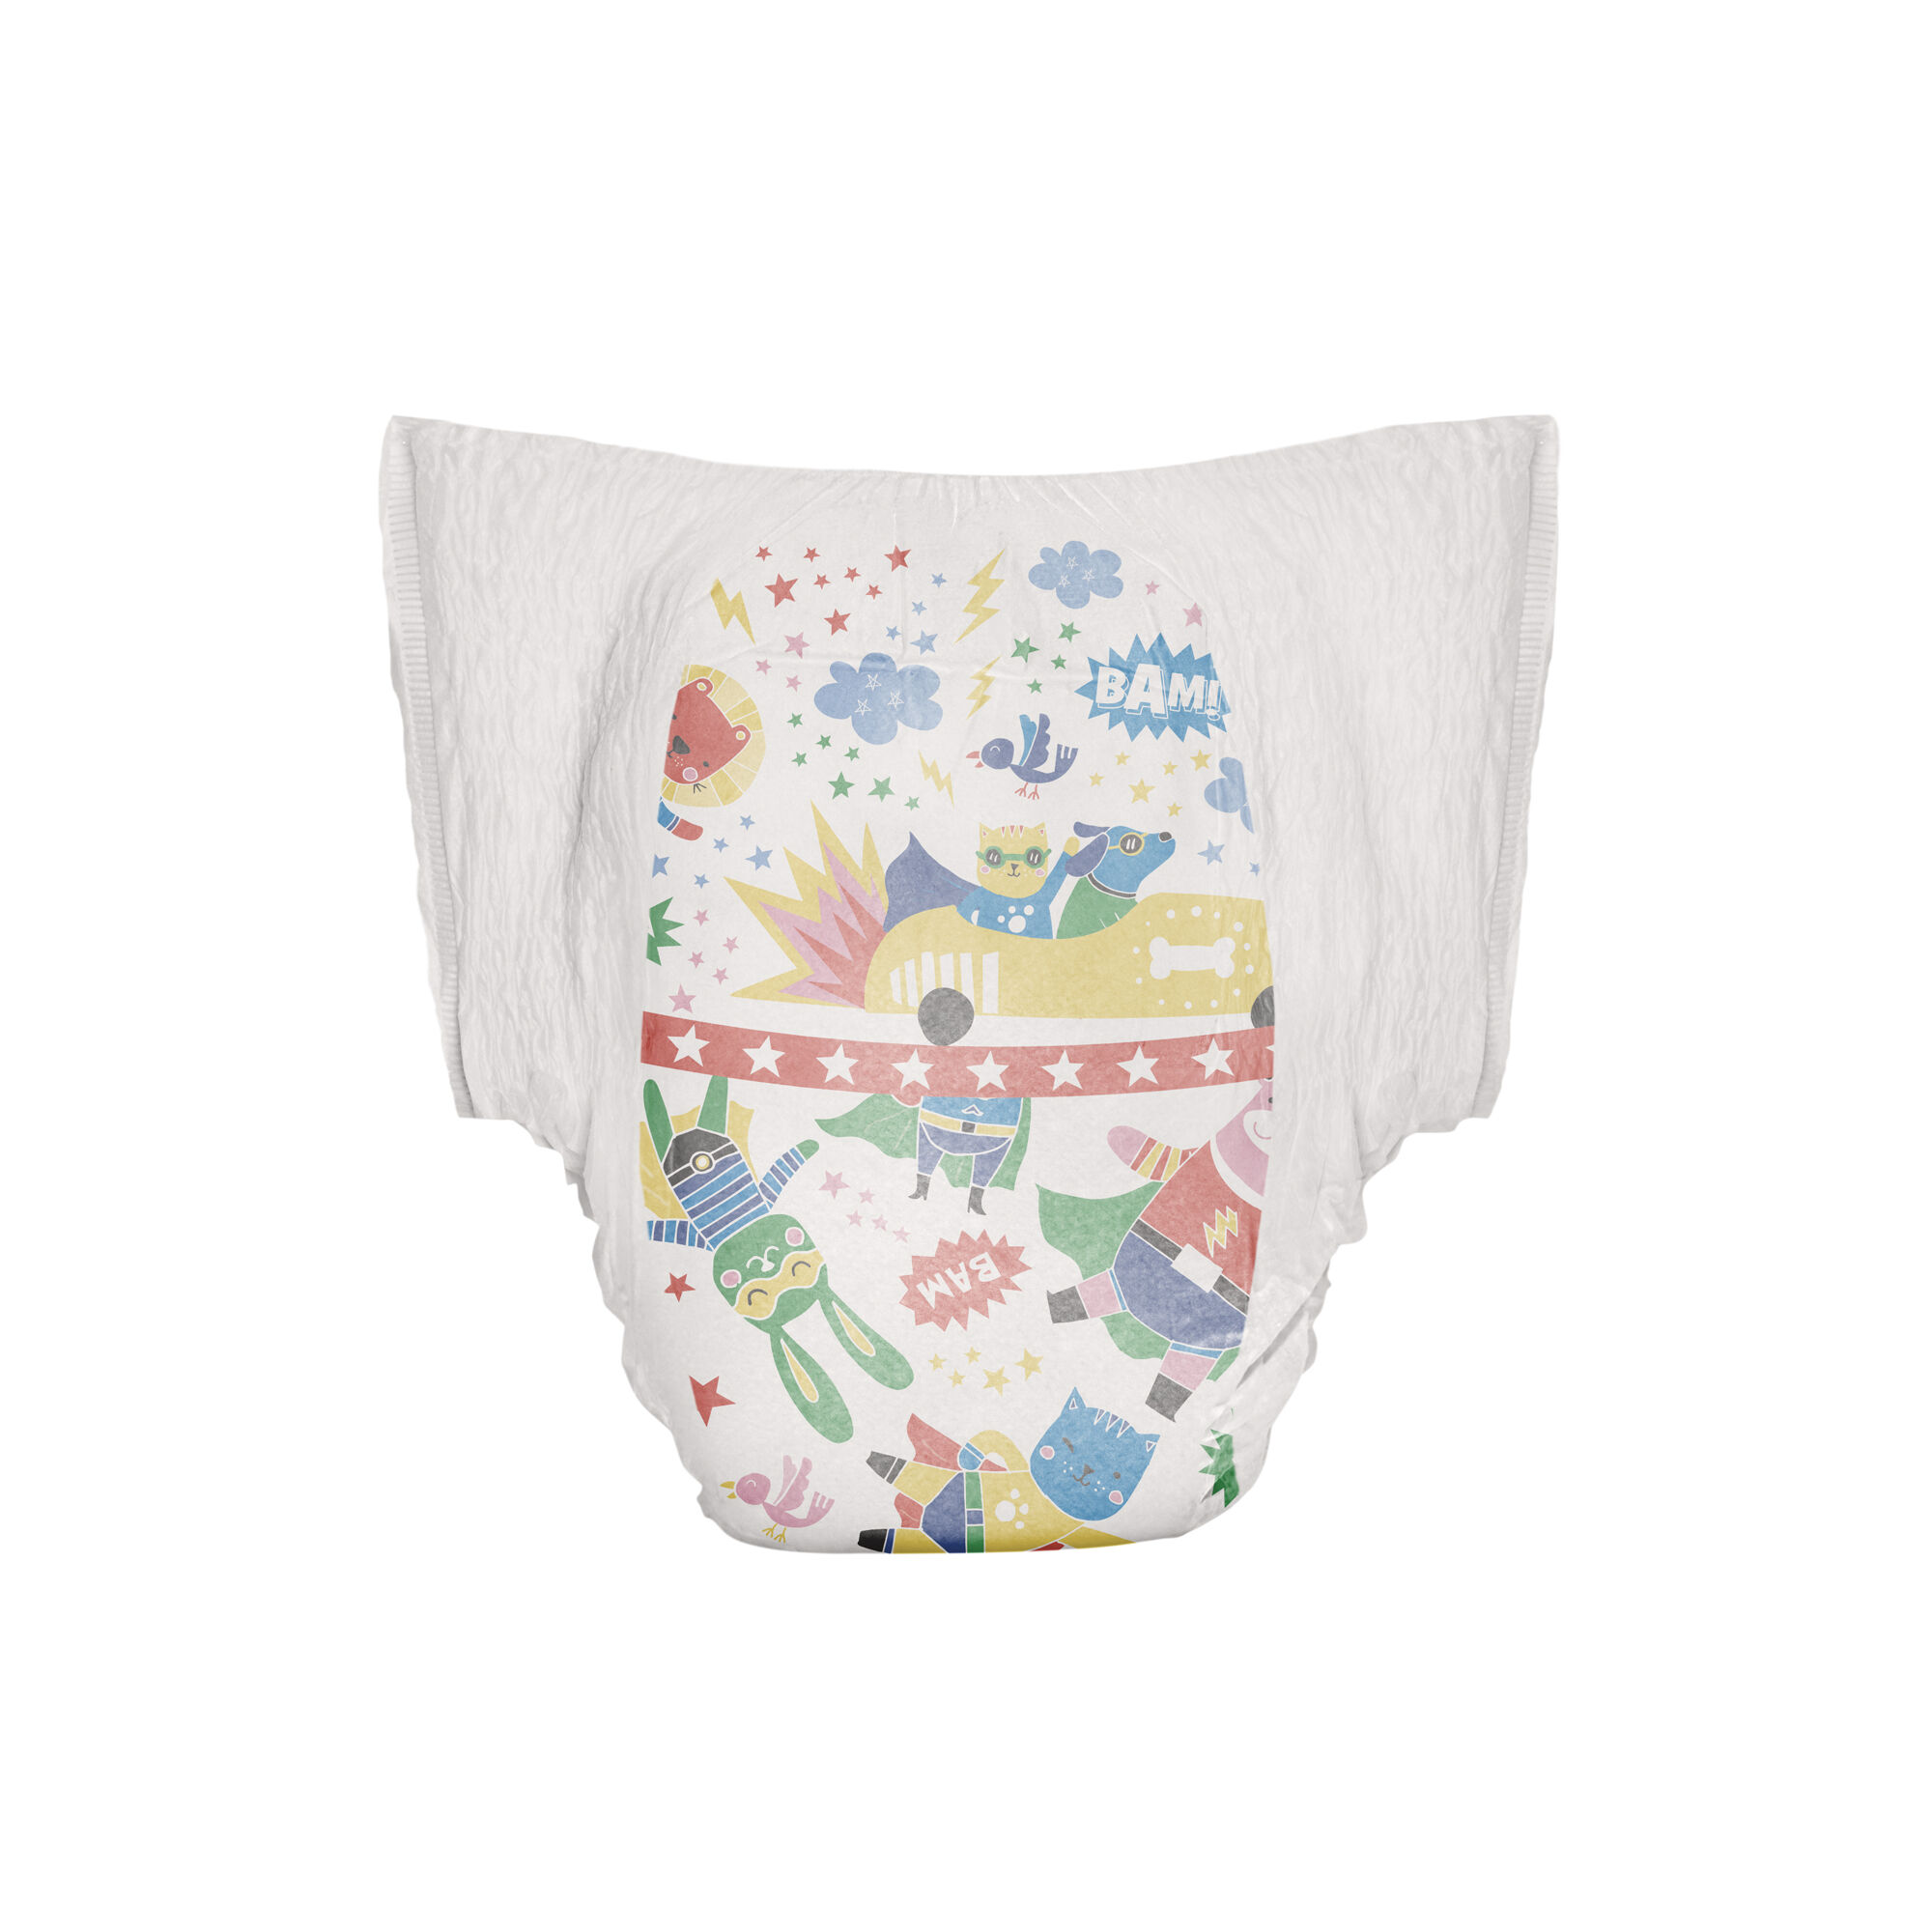 4-Pk) Honest Company Toddler Training Pants Undie Fairies Size 3T